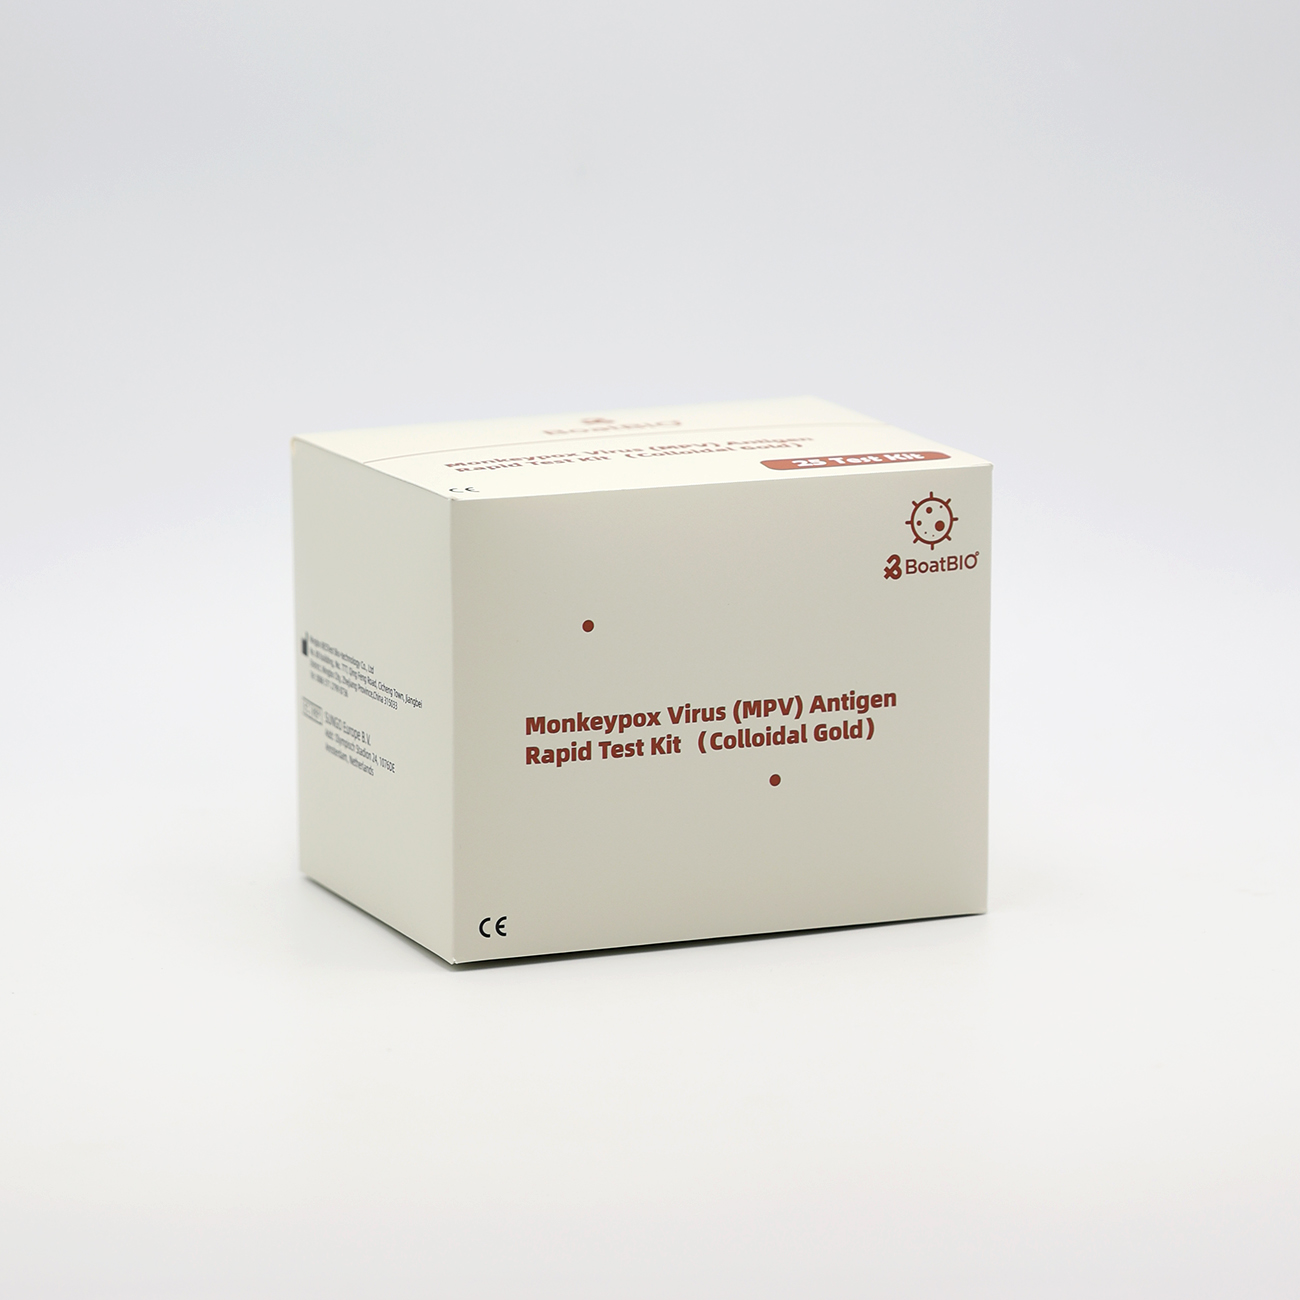 Monkeypox Virus (MPV) Antigen Rapid Test Kit(Colloidal Gold)